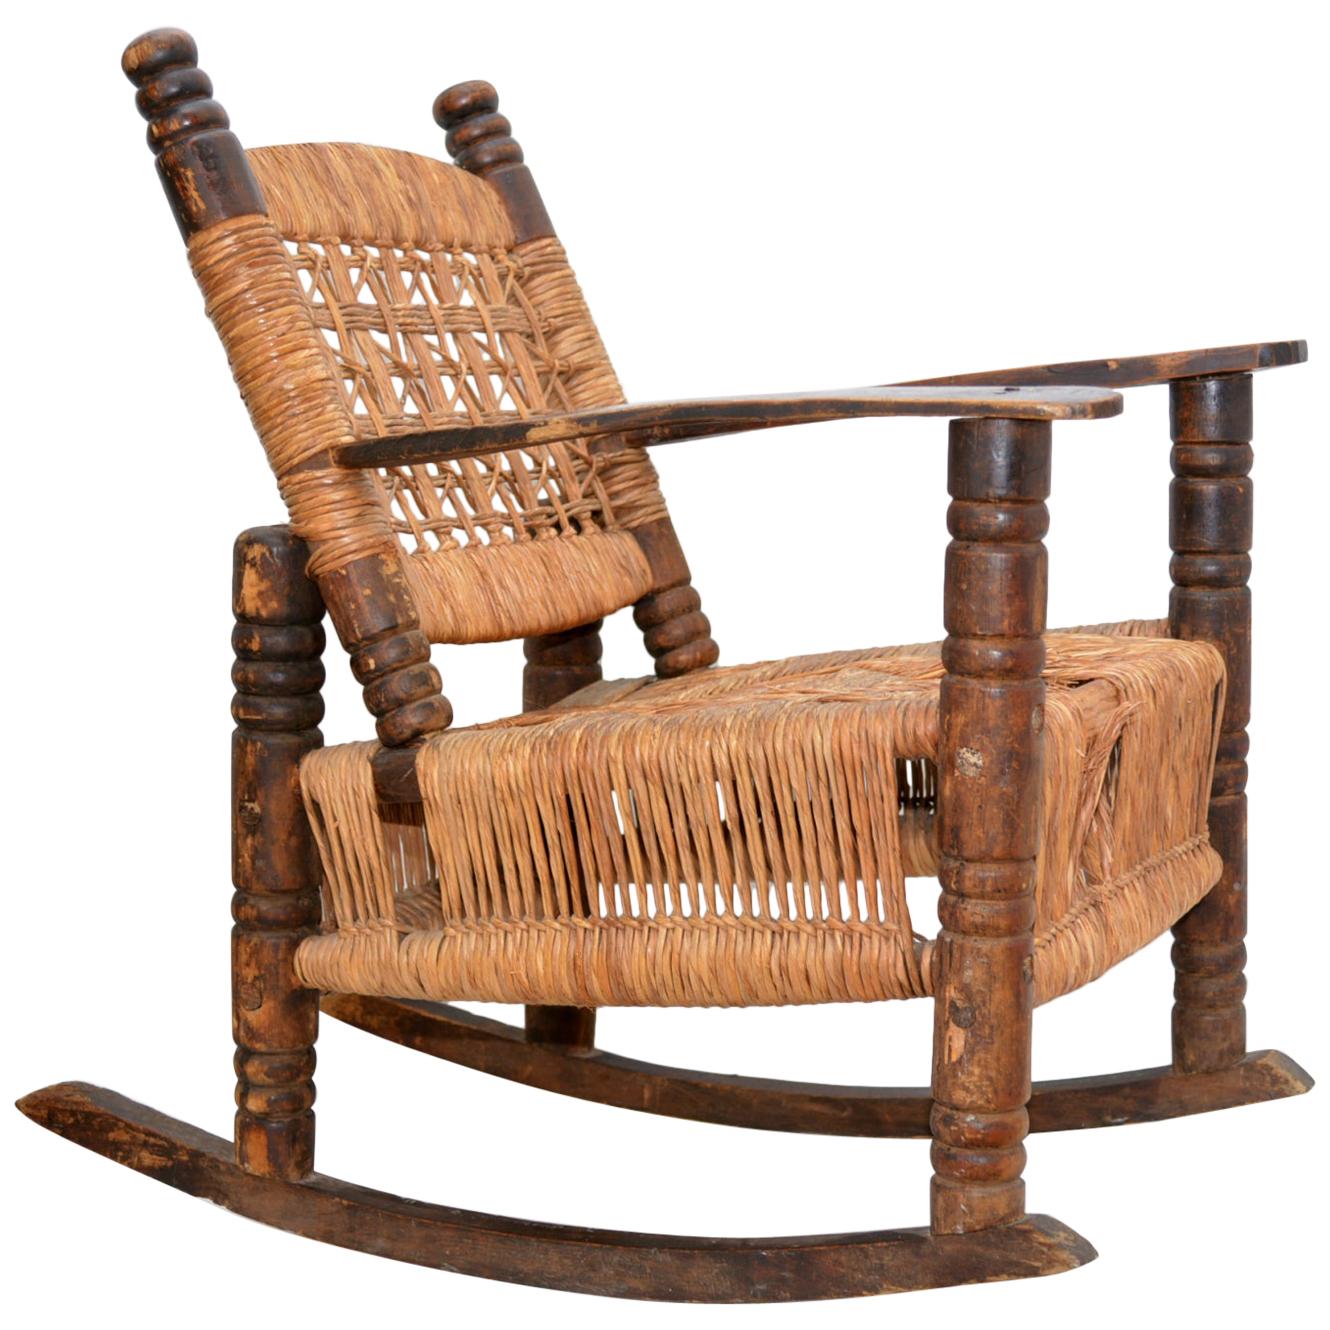 Antique Children's Rocking Chair Wood and Wicker Seagrass Armchair Rocker, 1930s